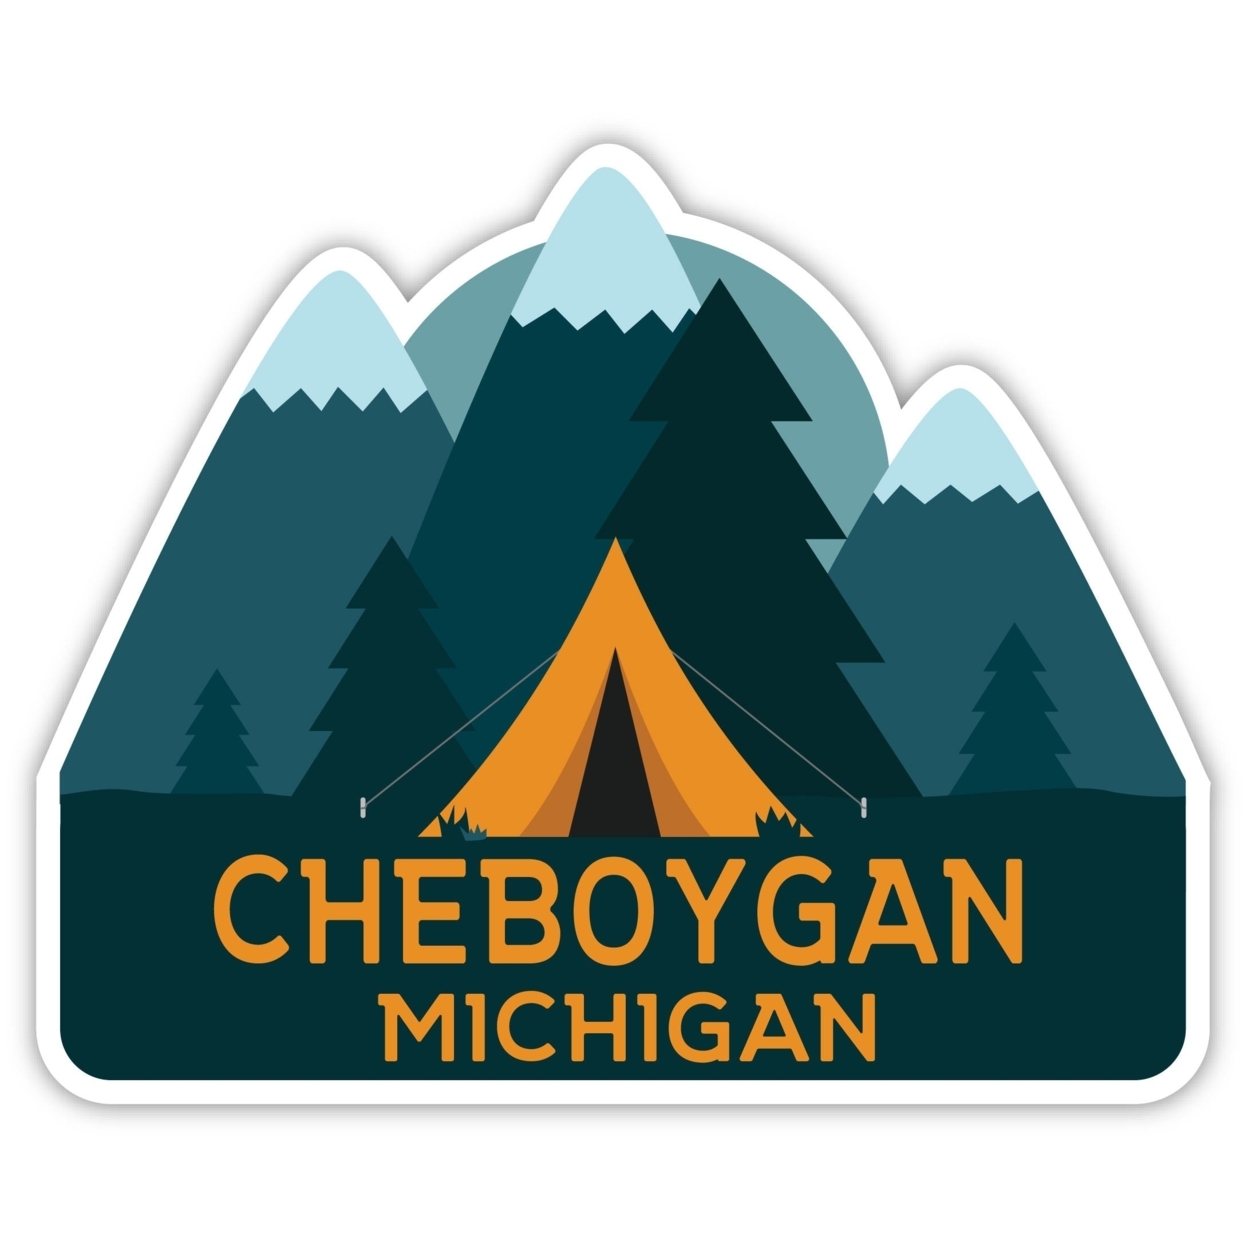 Cheboygan Michigan Souvenir Decorative Stickers (Choose Theme And Size) - 4-Pack, 4-Inch, Tent